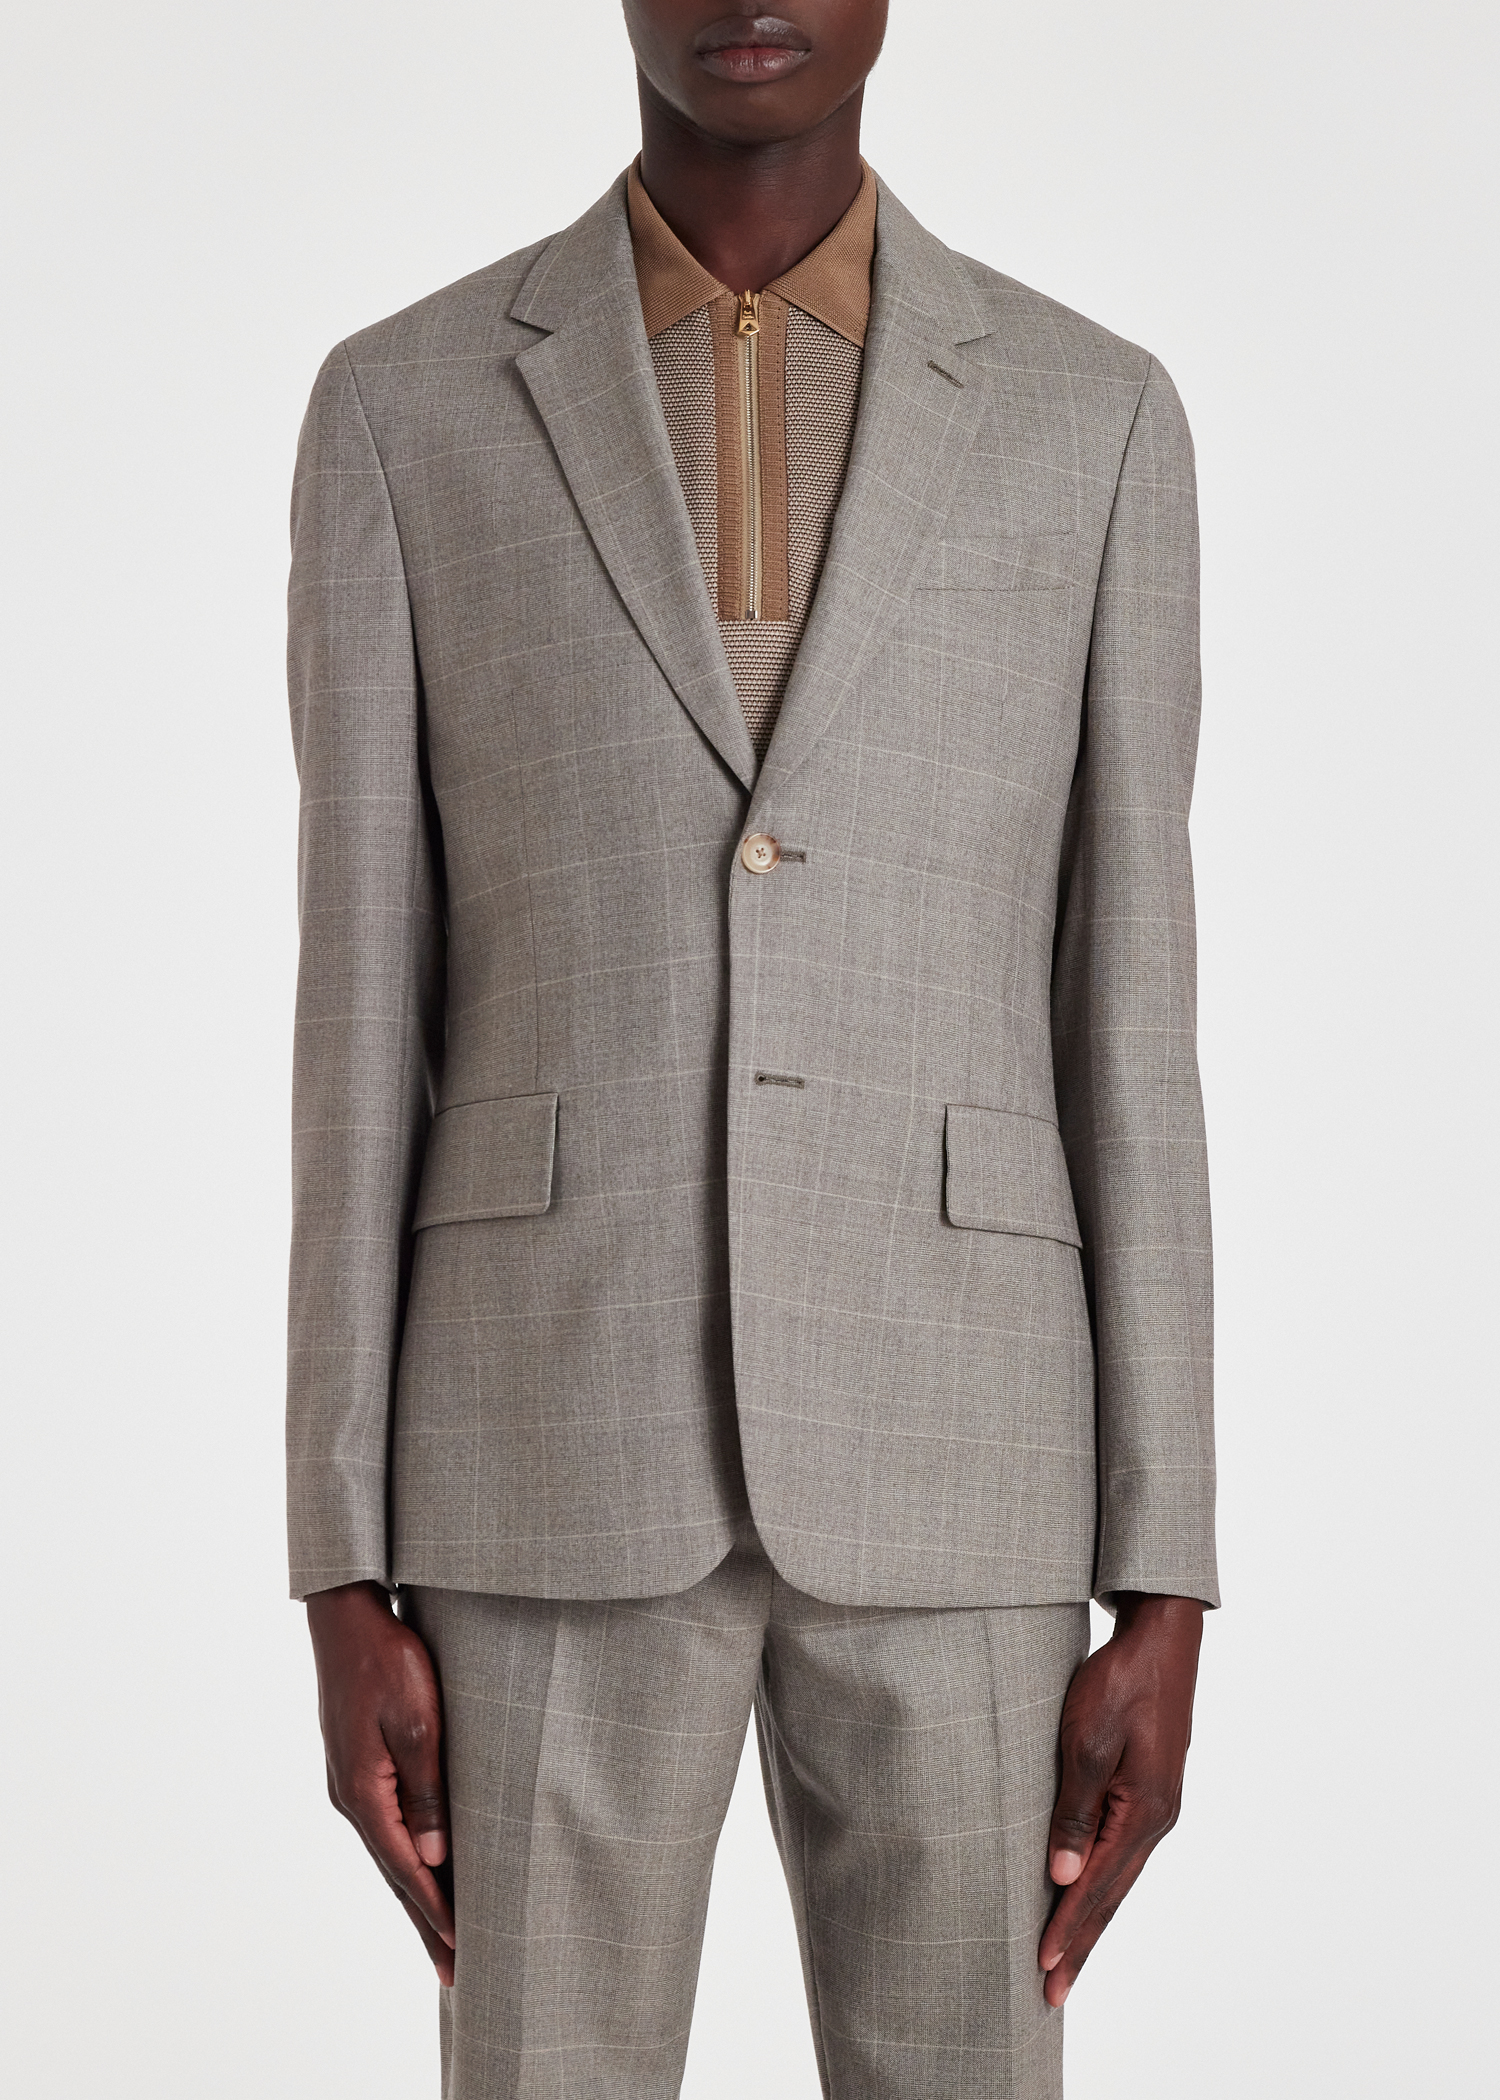 Designer Buisness Suits & Attire for Men | Paul Smith